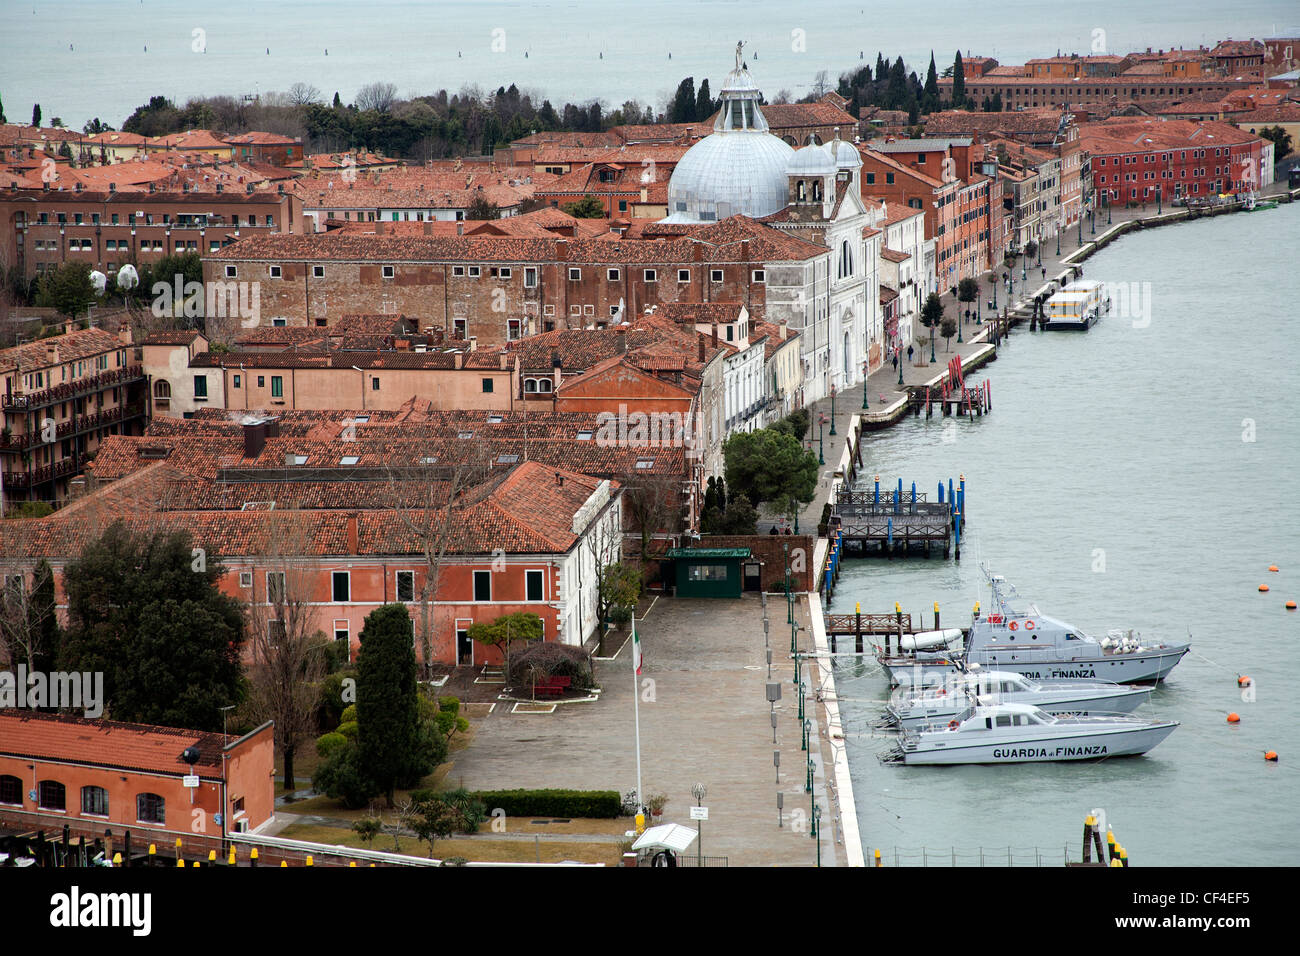 Blick über Venedig - Sestiere Castello - von der Spitze des Campanile - Glockenturm - San Giorgio Maggiore Venedig Italien Stockfoto